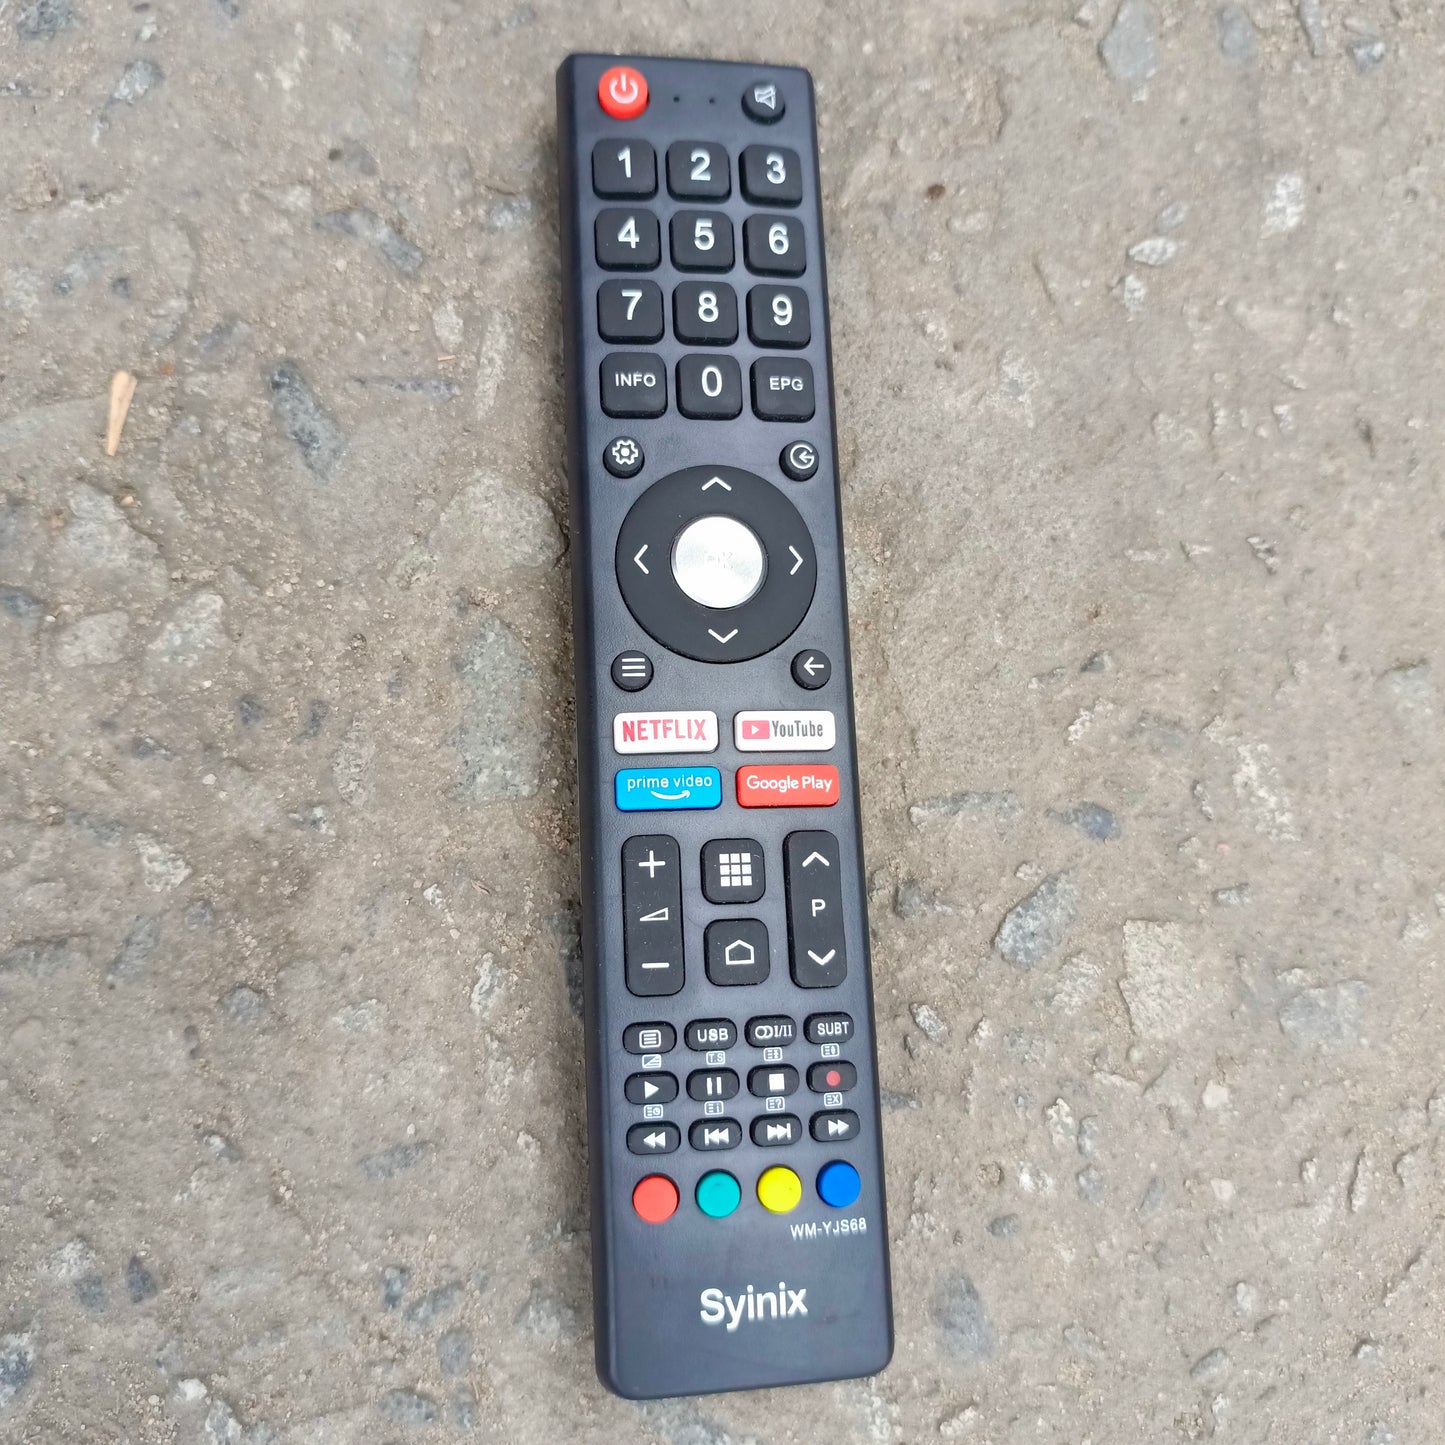 Syinix WM-YJS68 Android Smart TV Remote Control - Brand New